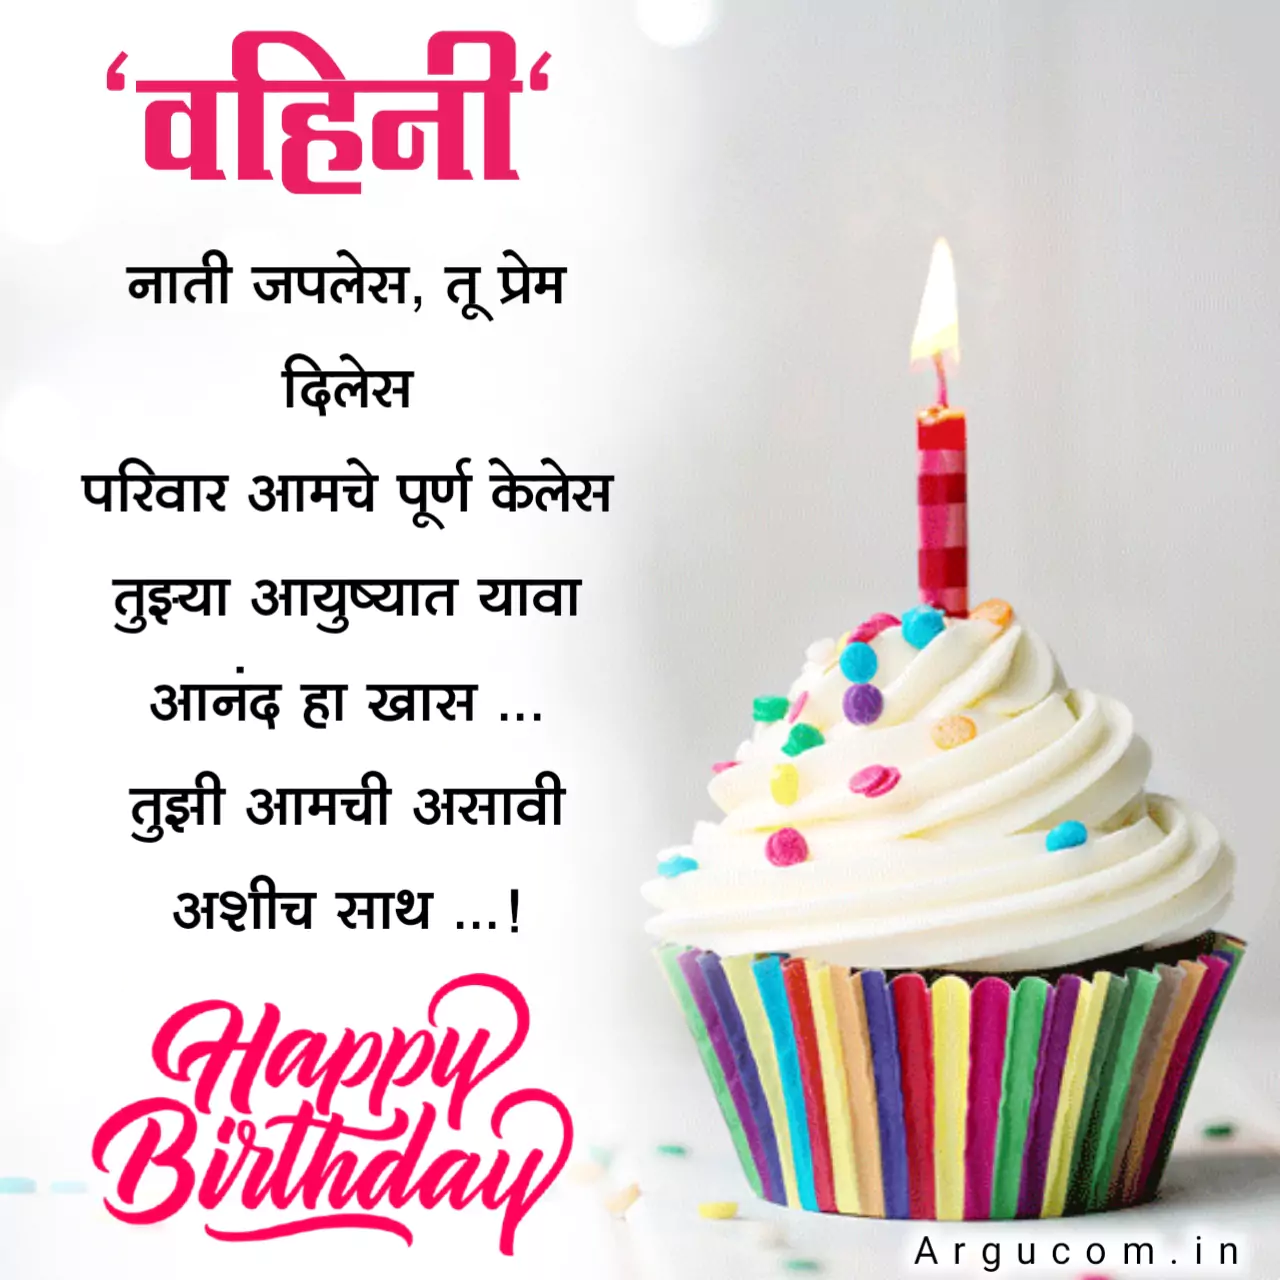 Happy Birthday wishes for vahini in marathi